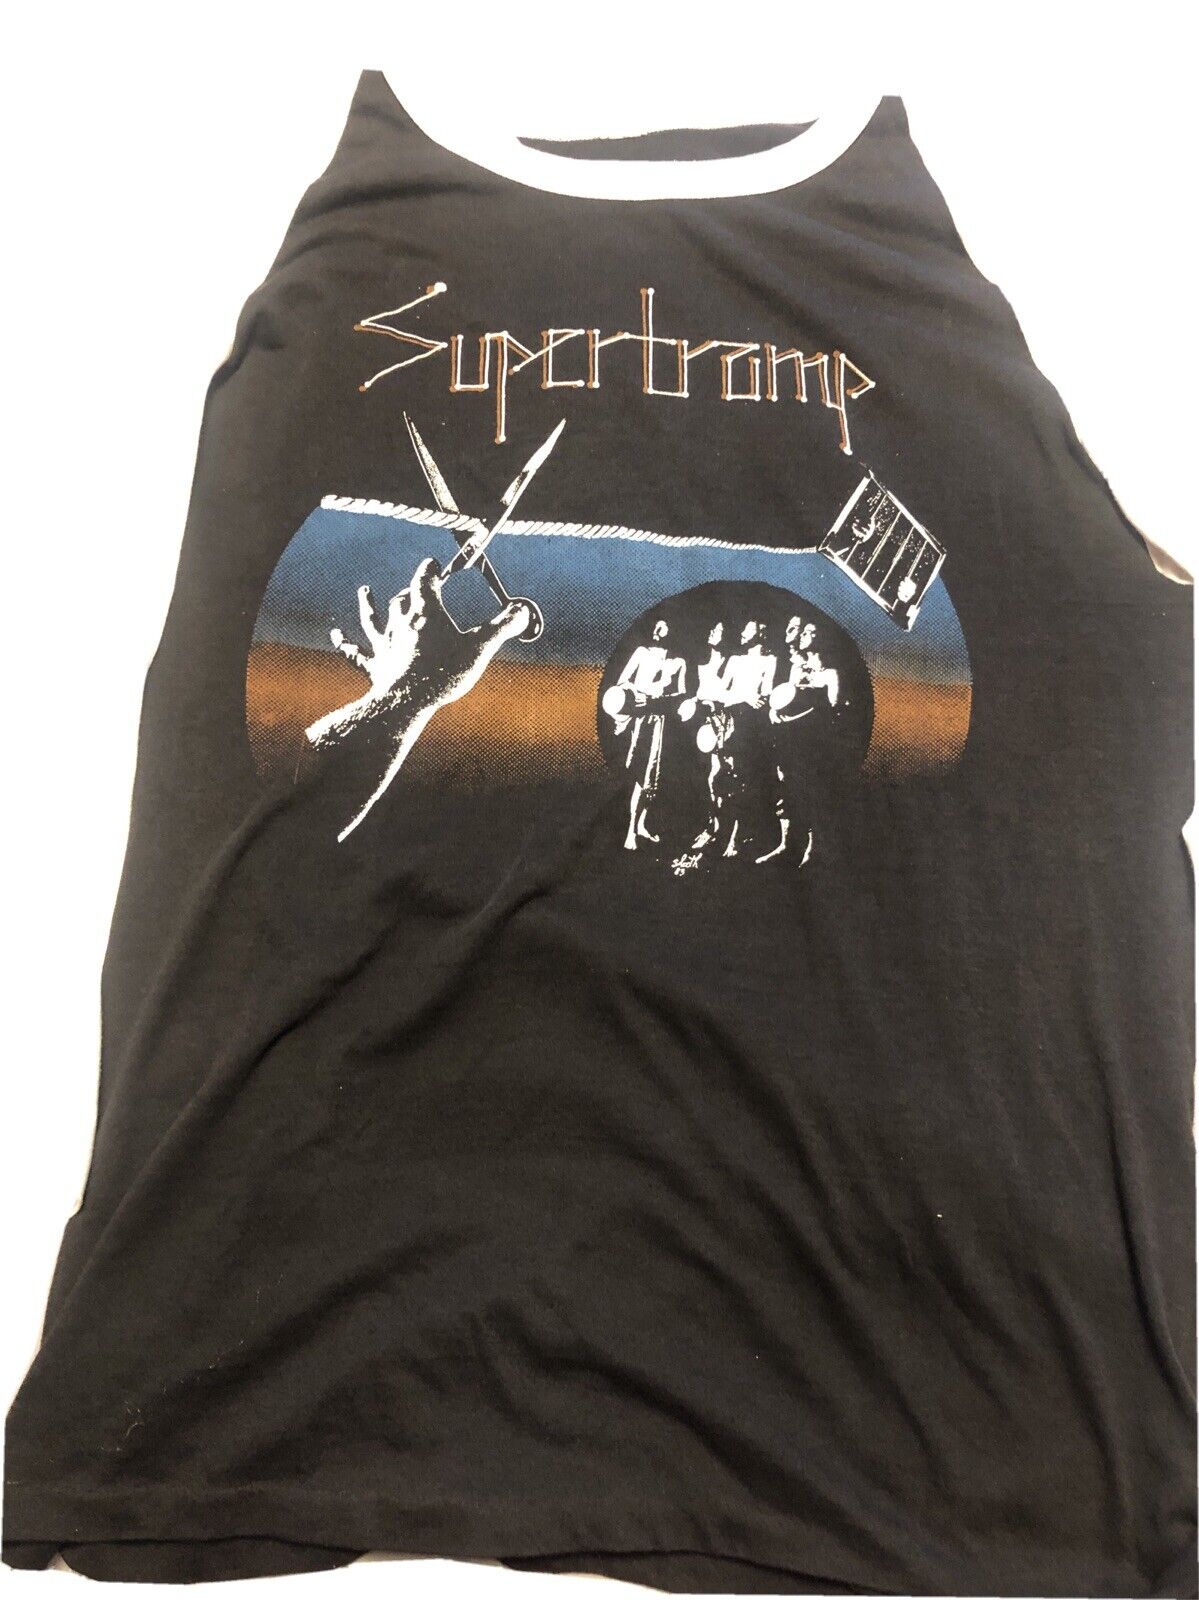 Supertramp 1983 Max 78% Popular brand OFF Canadian Concert Medium T-shirt Mens Tour